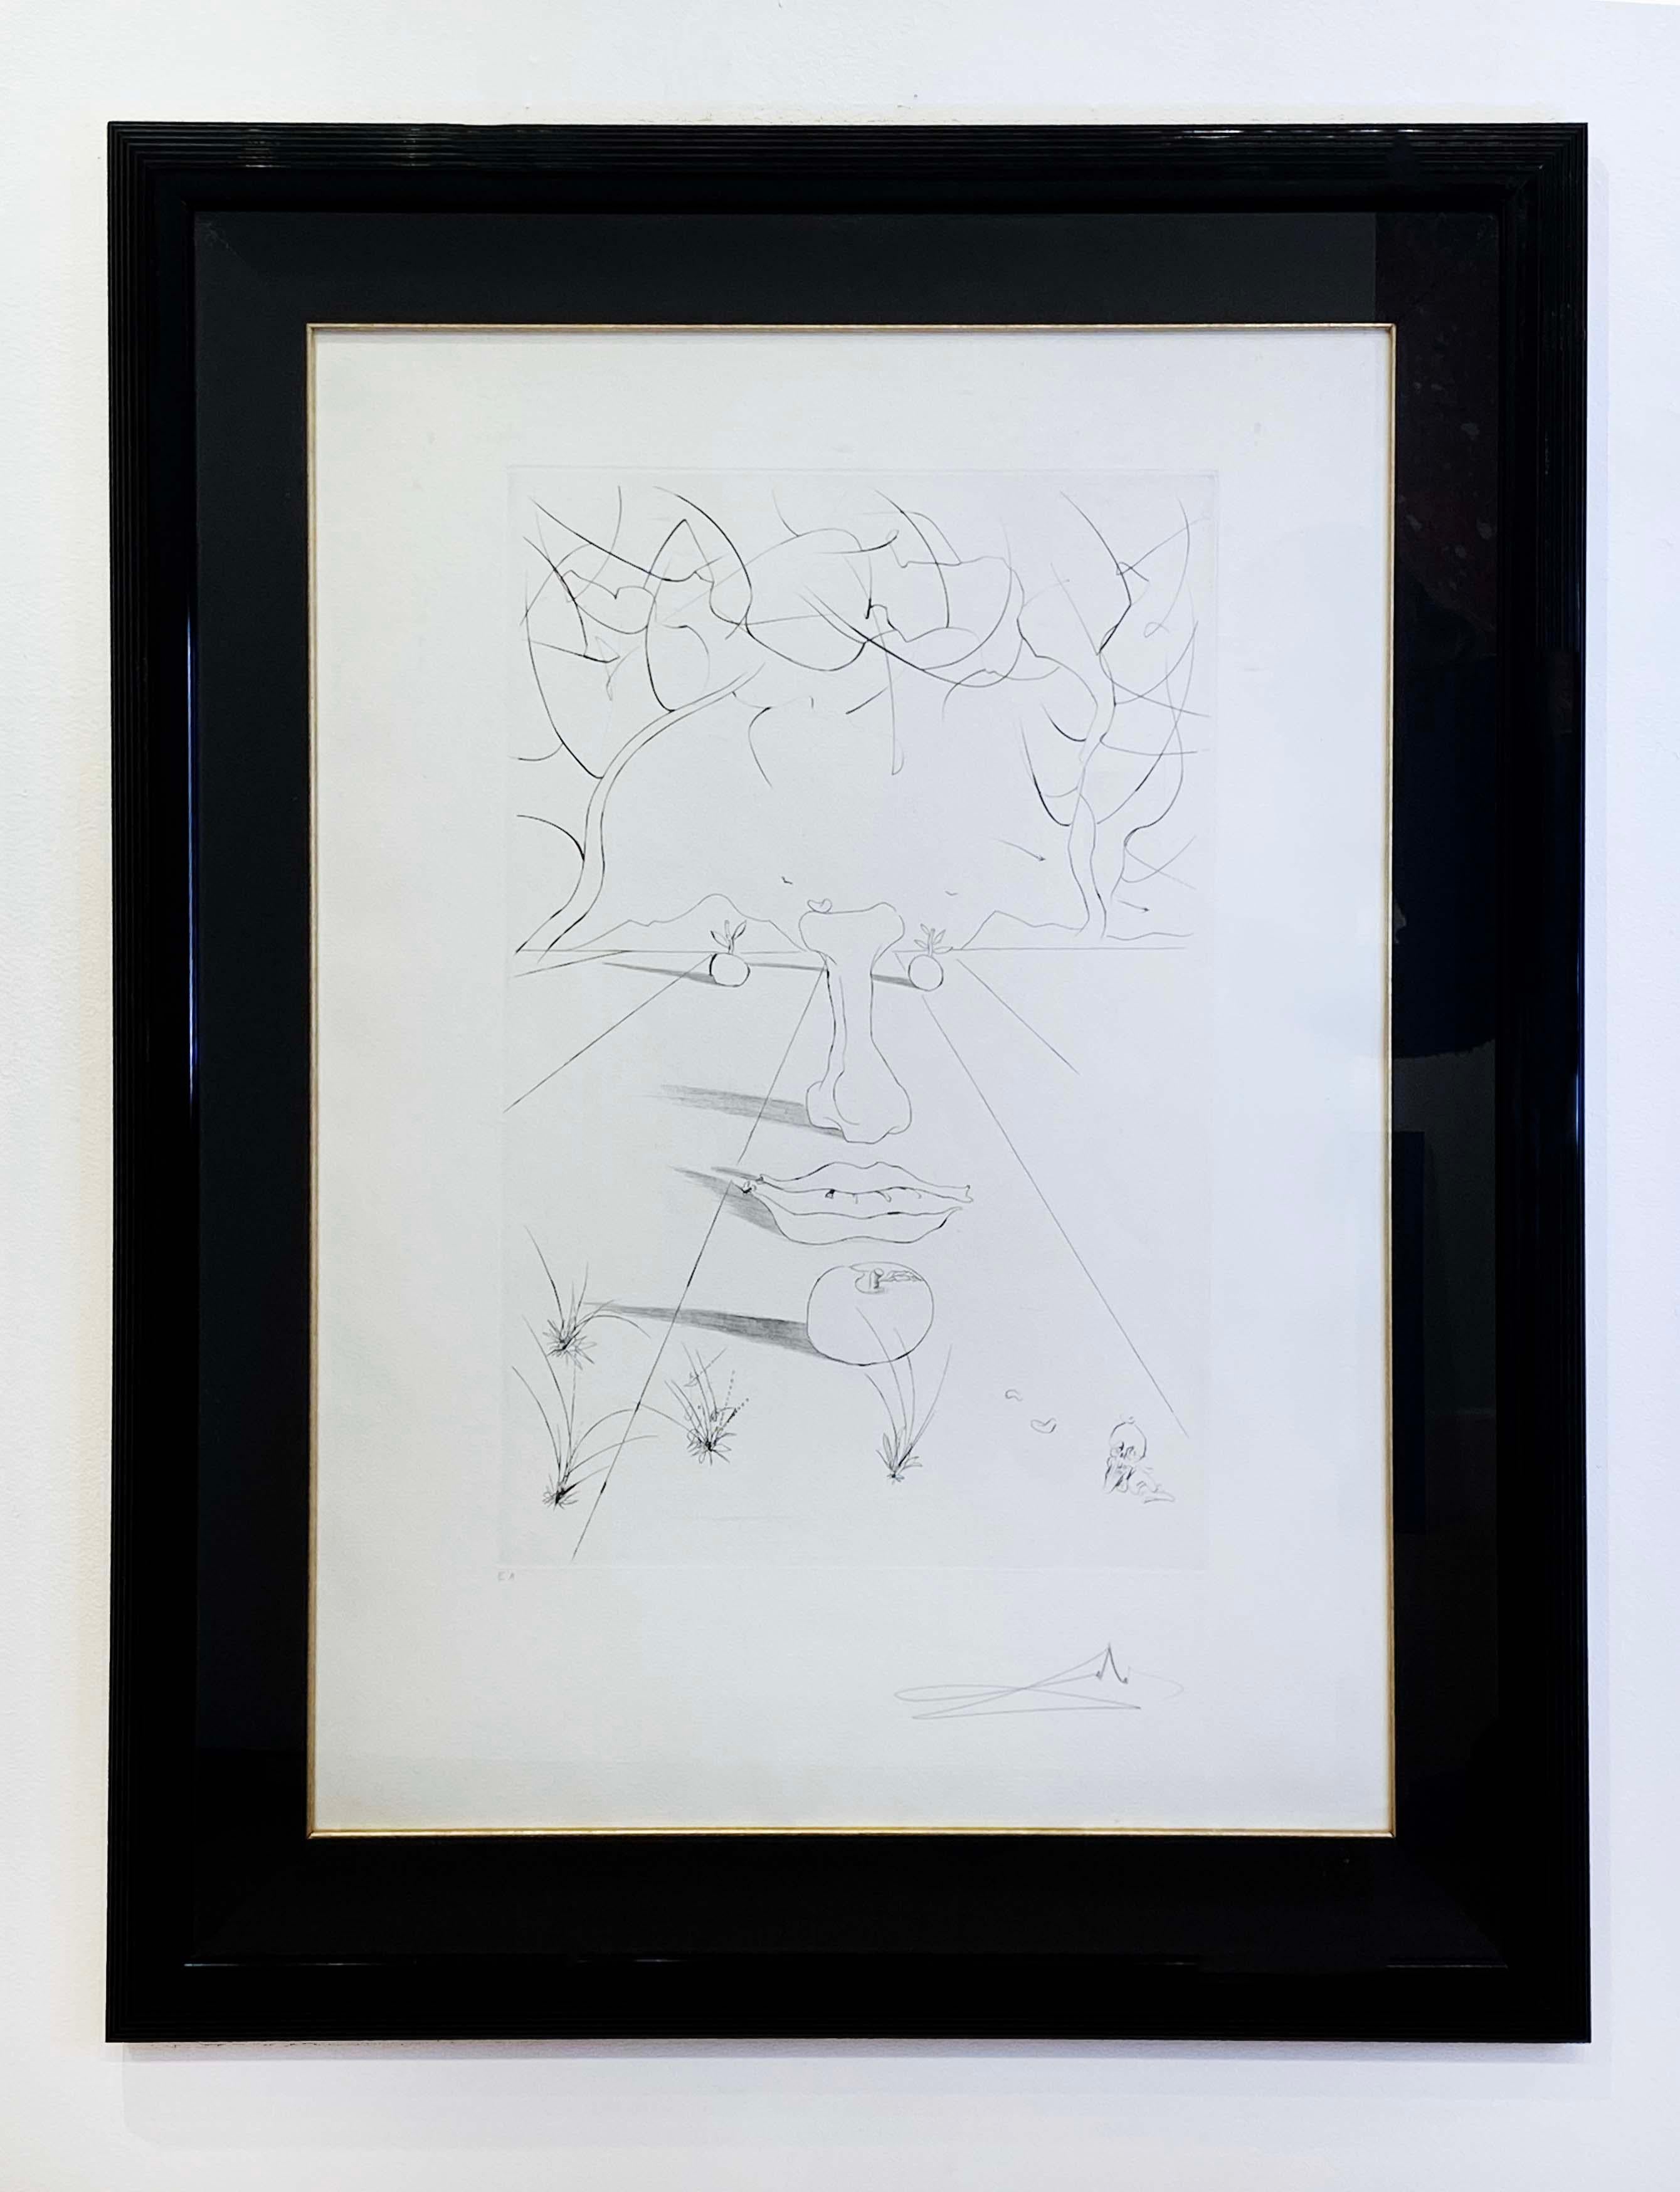 Artist:  Dali, Salvador
Title:  Visage Surrealiste
Series:  Aurelia
Date:  1972
Medium:  Engraving
Unframed Dimensions: 29.92